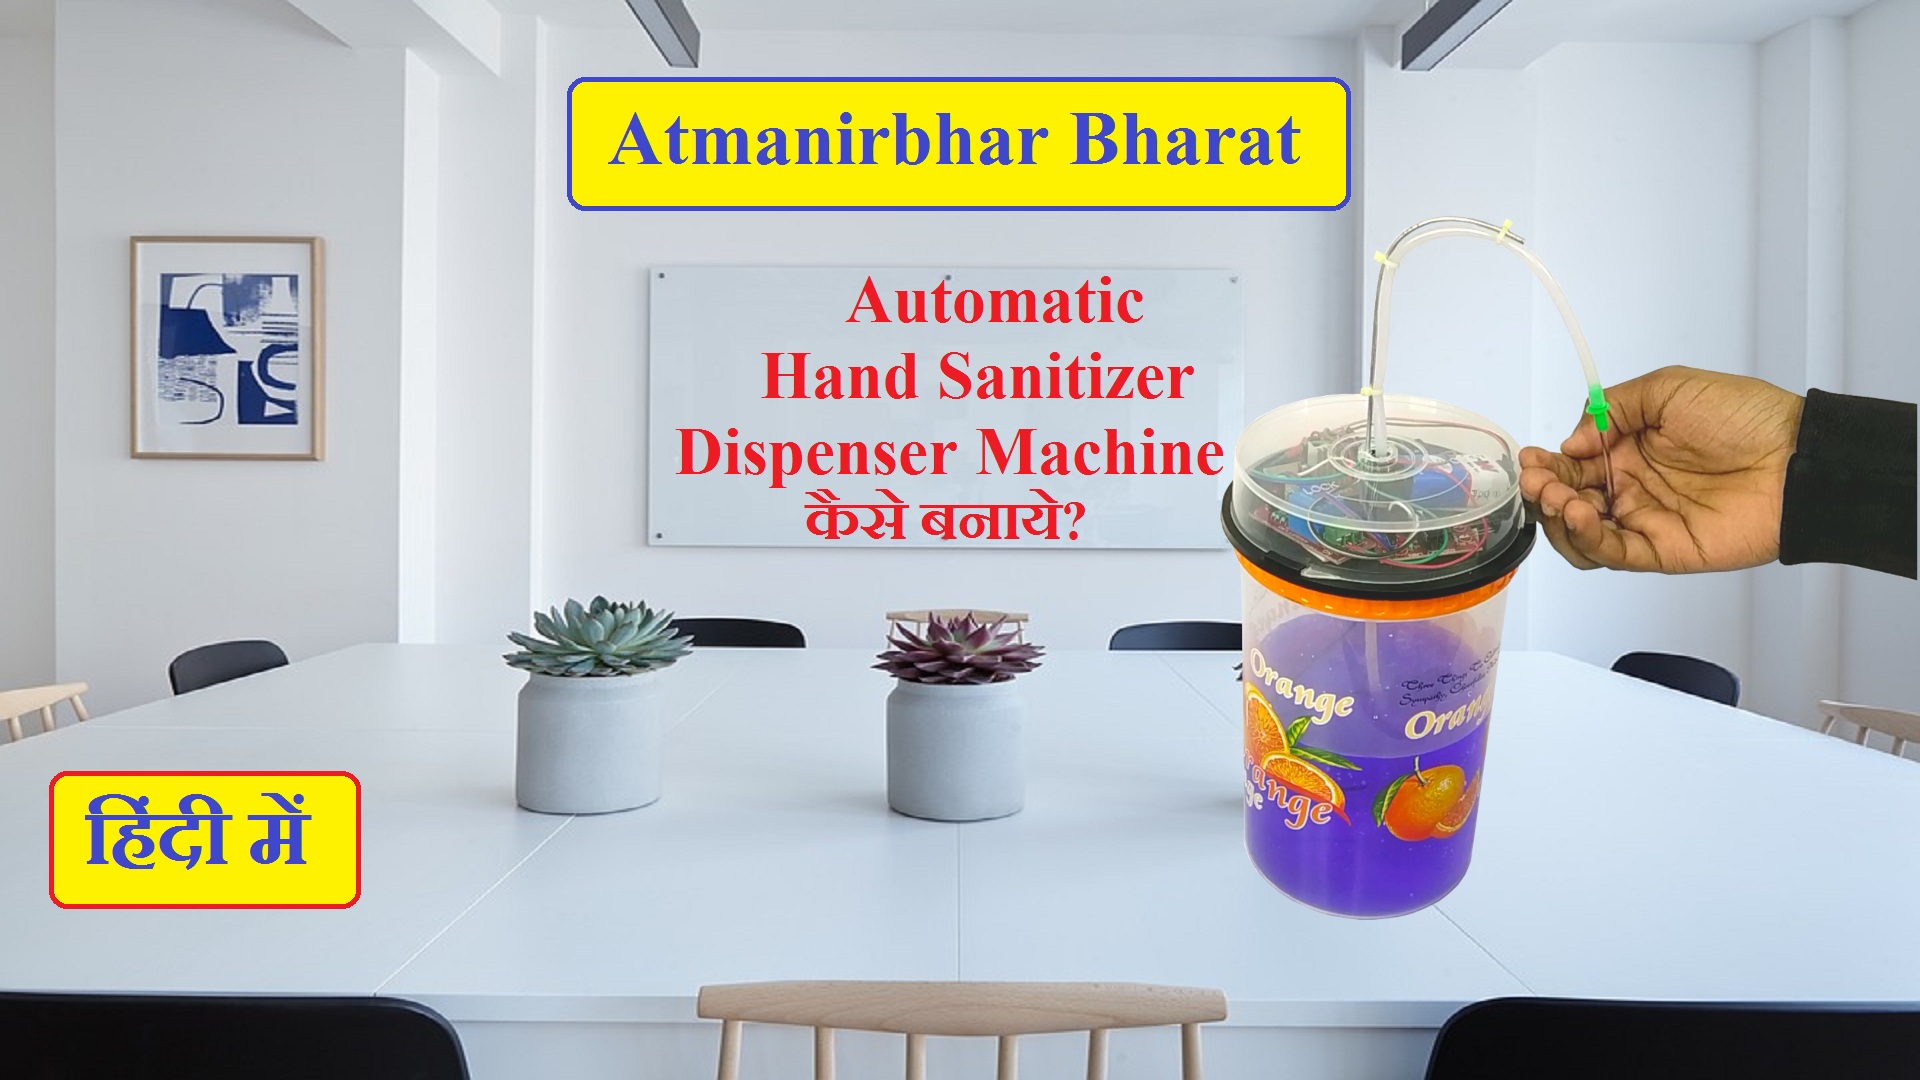 How to Make Automatic Hand Sanitizer Dispenser Machine | हिंदी में | Atmanirbhar Bharat | RoboGeeks